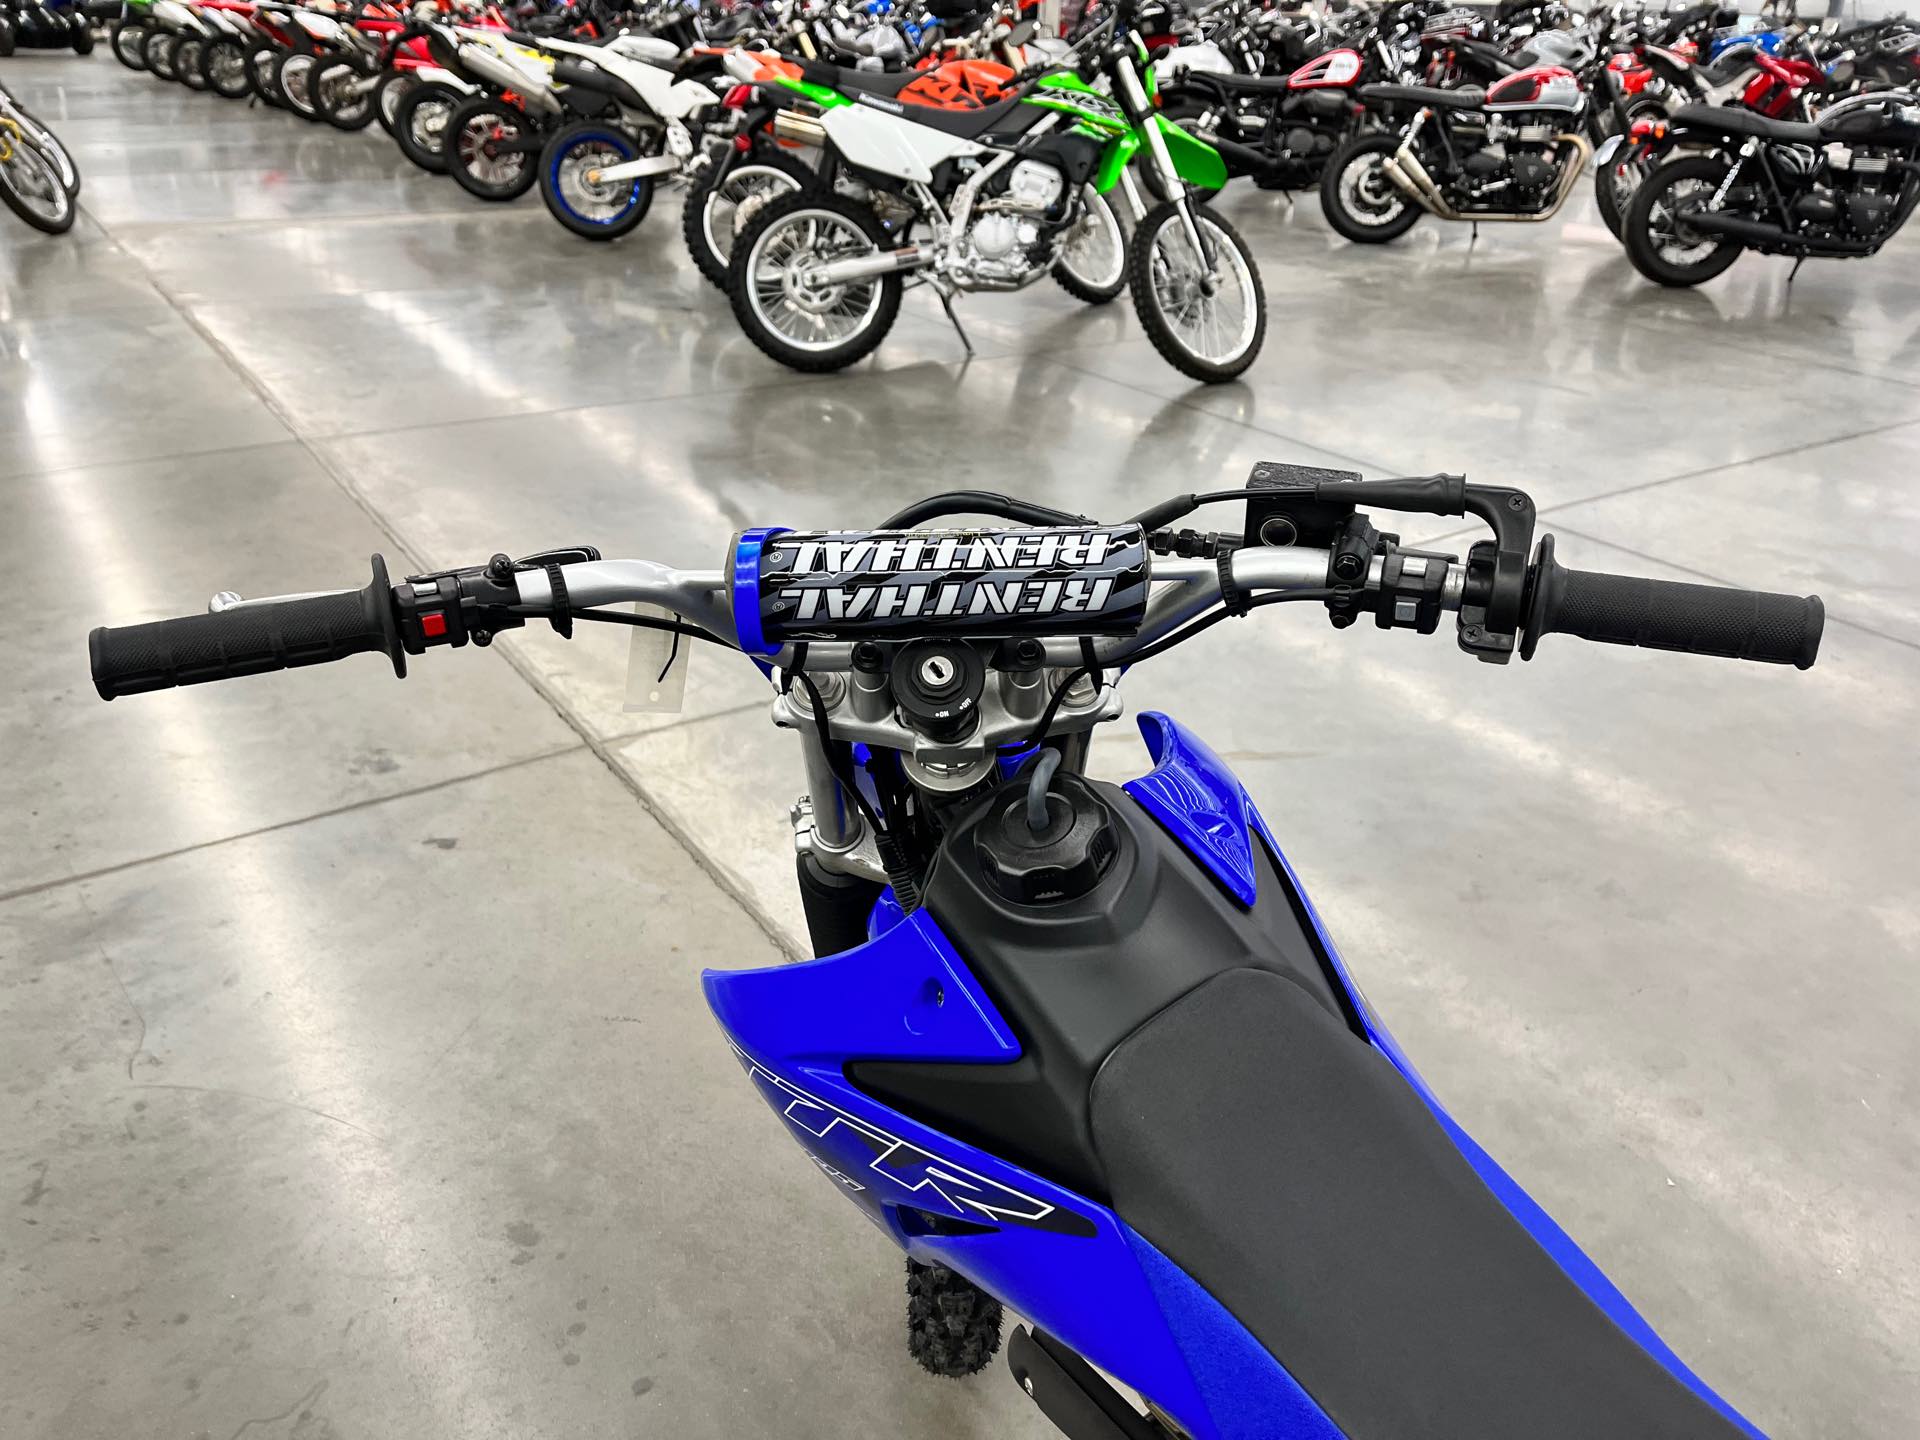 2019 Yamaha TT-R 125LE at Aces Motorcycles - Denver